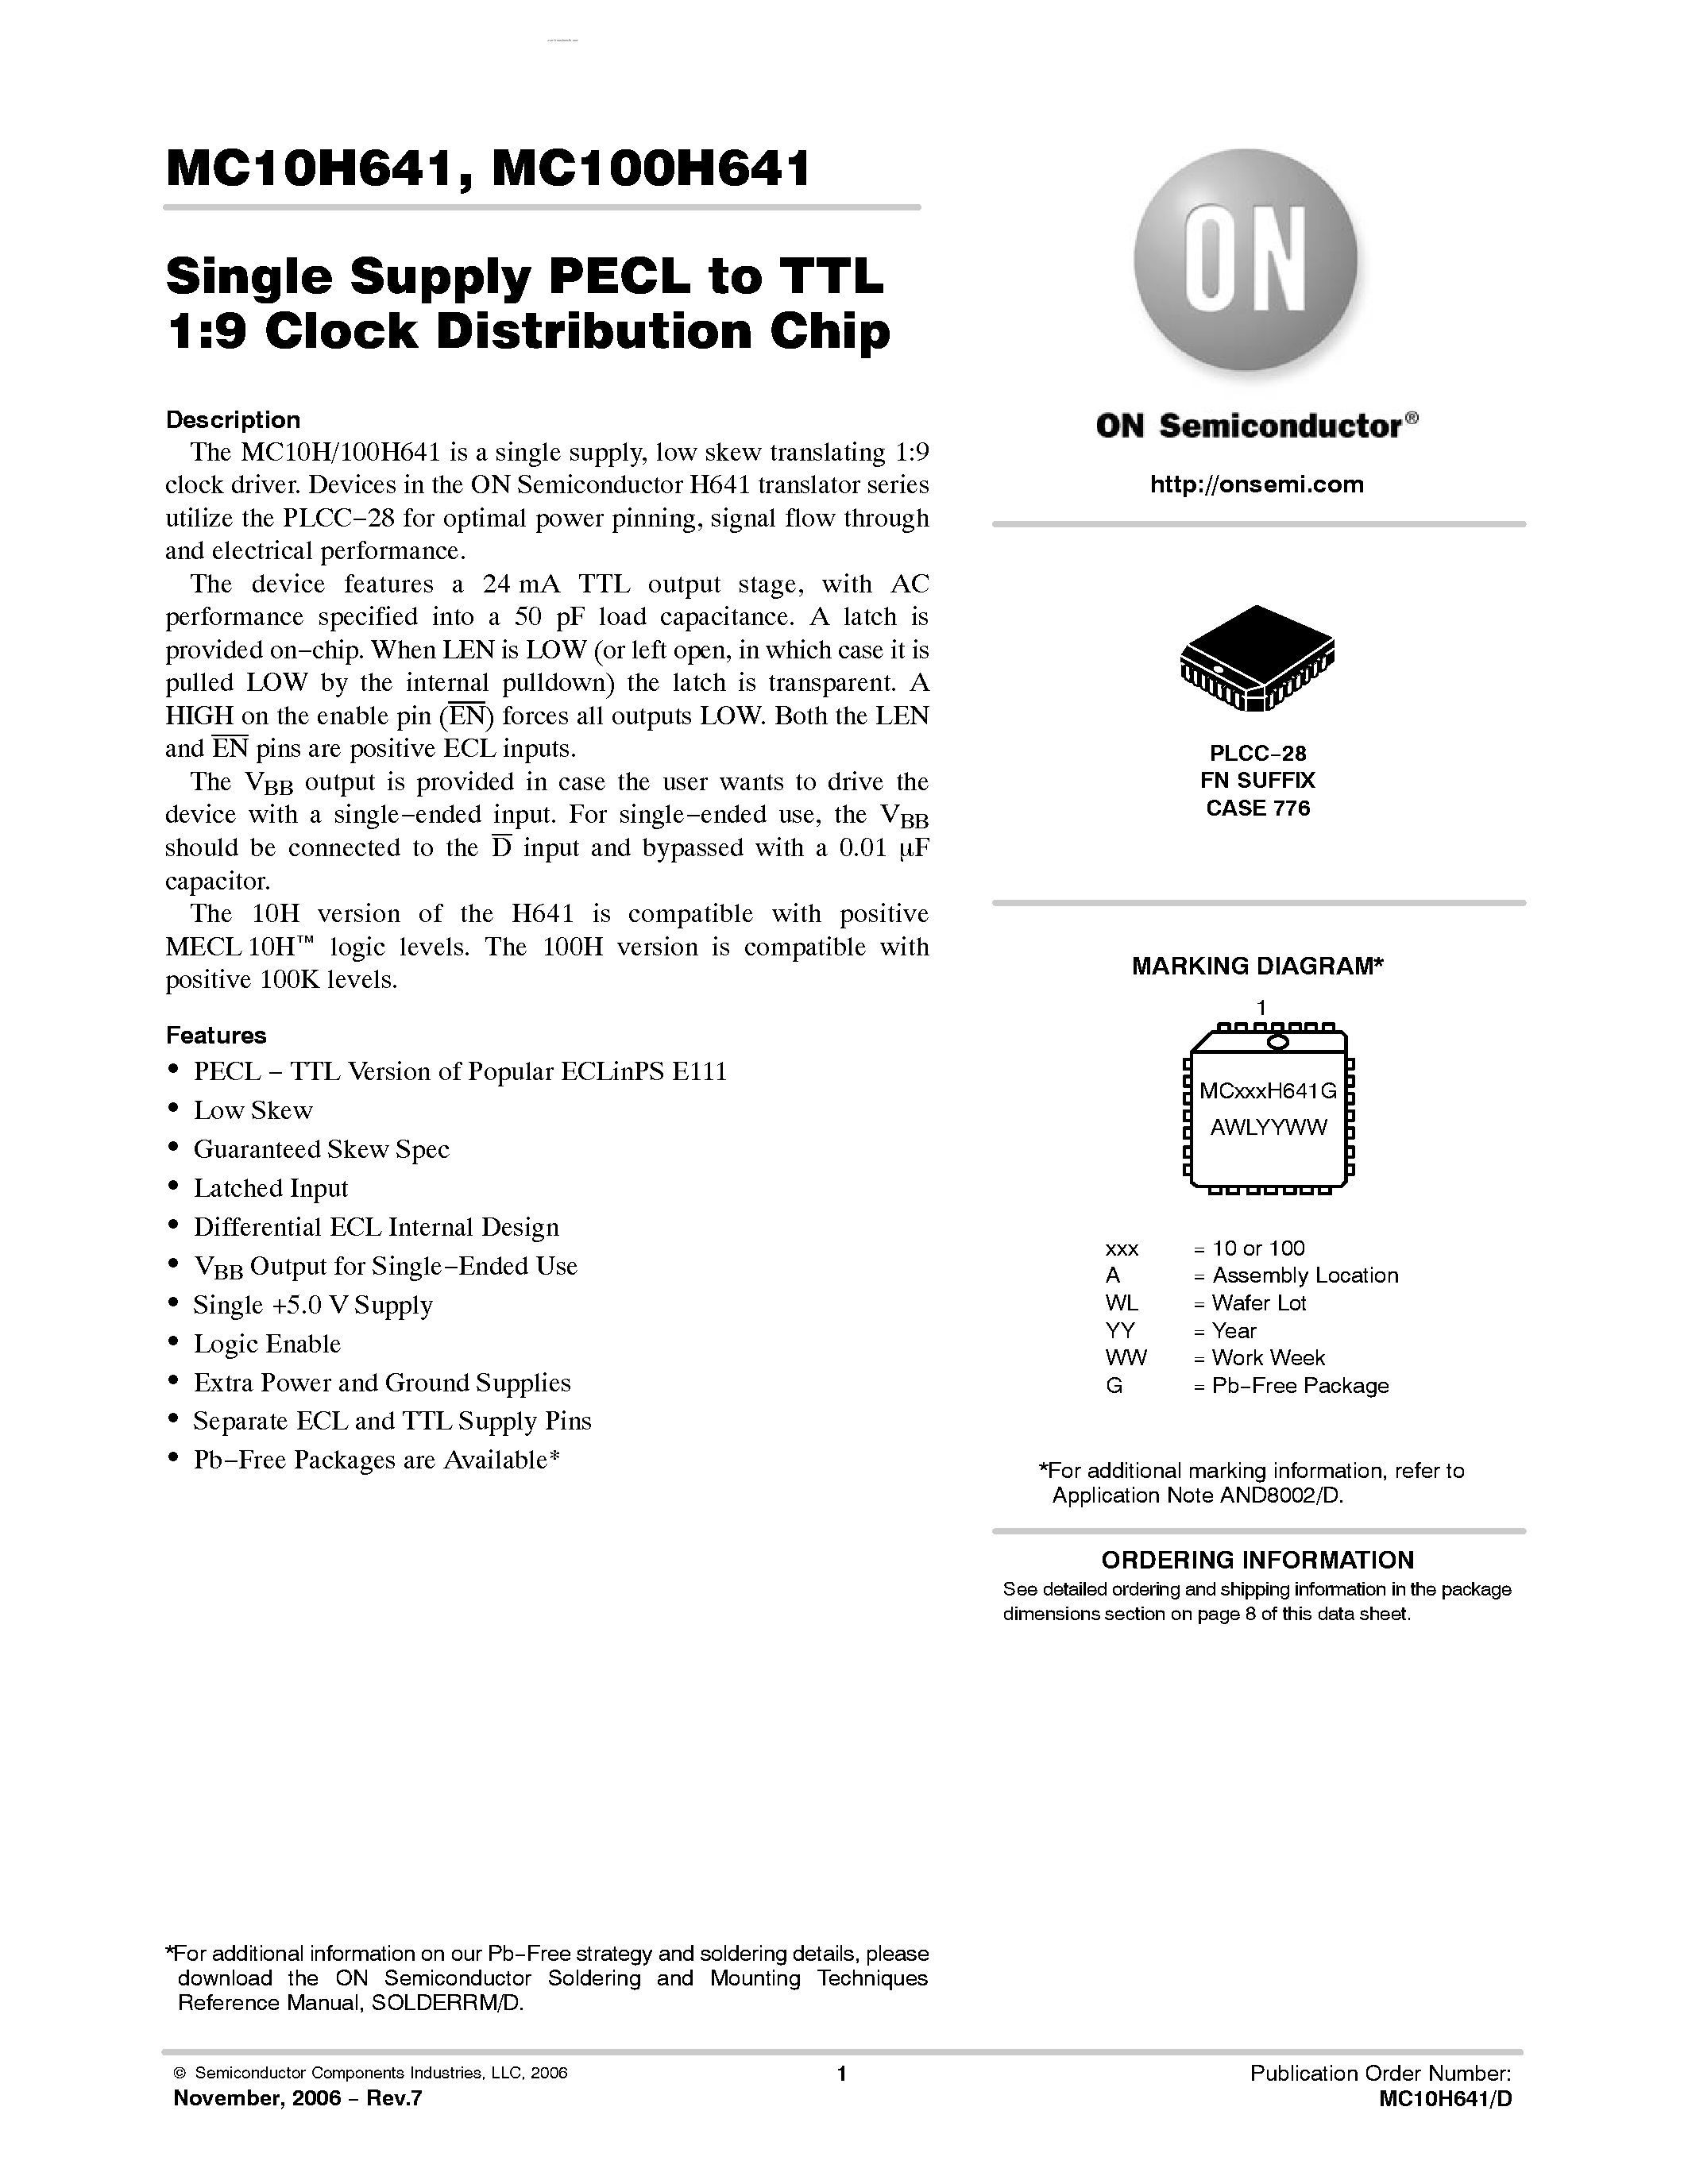 Datasheet MC10H641 - SINGLE SUPPLY PECL-TTL 1:9 CLOCK DISTRIBUTION CHIP page 1